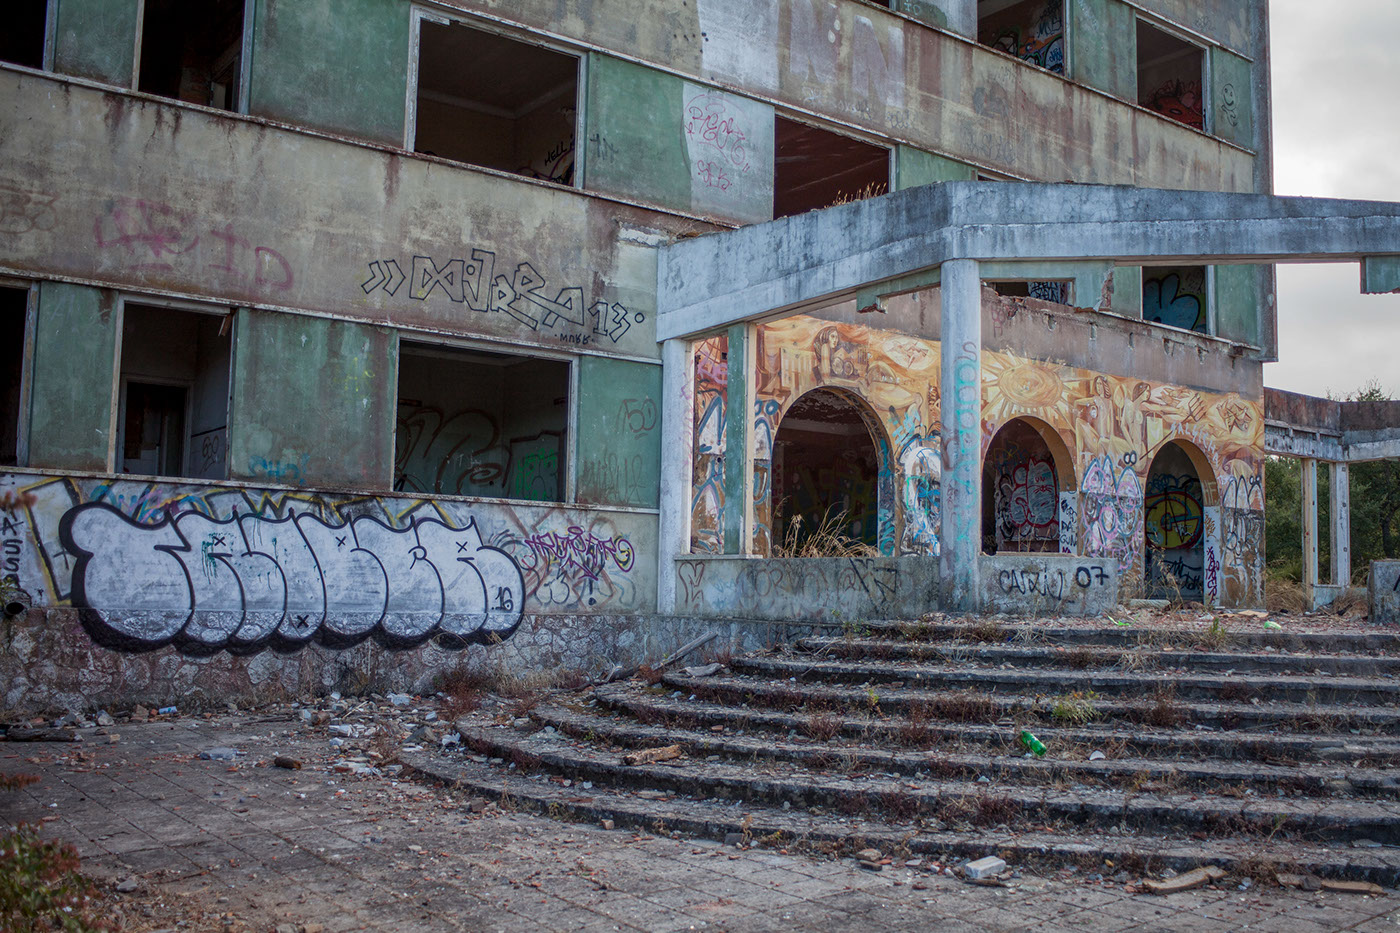 urbex ruins ruinas ectoplasma   ectoplasm urbanexploration Photographyproject urbexproject photoproject